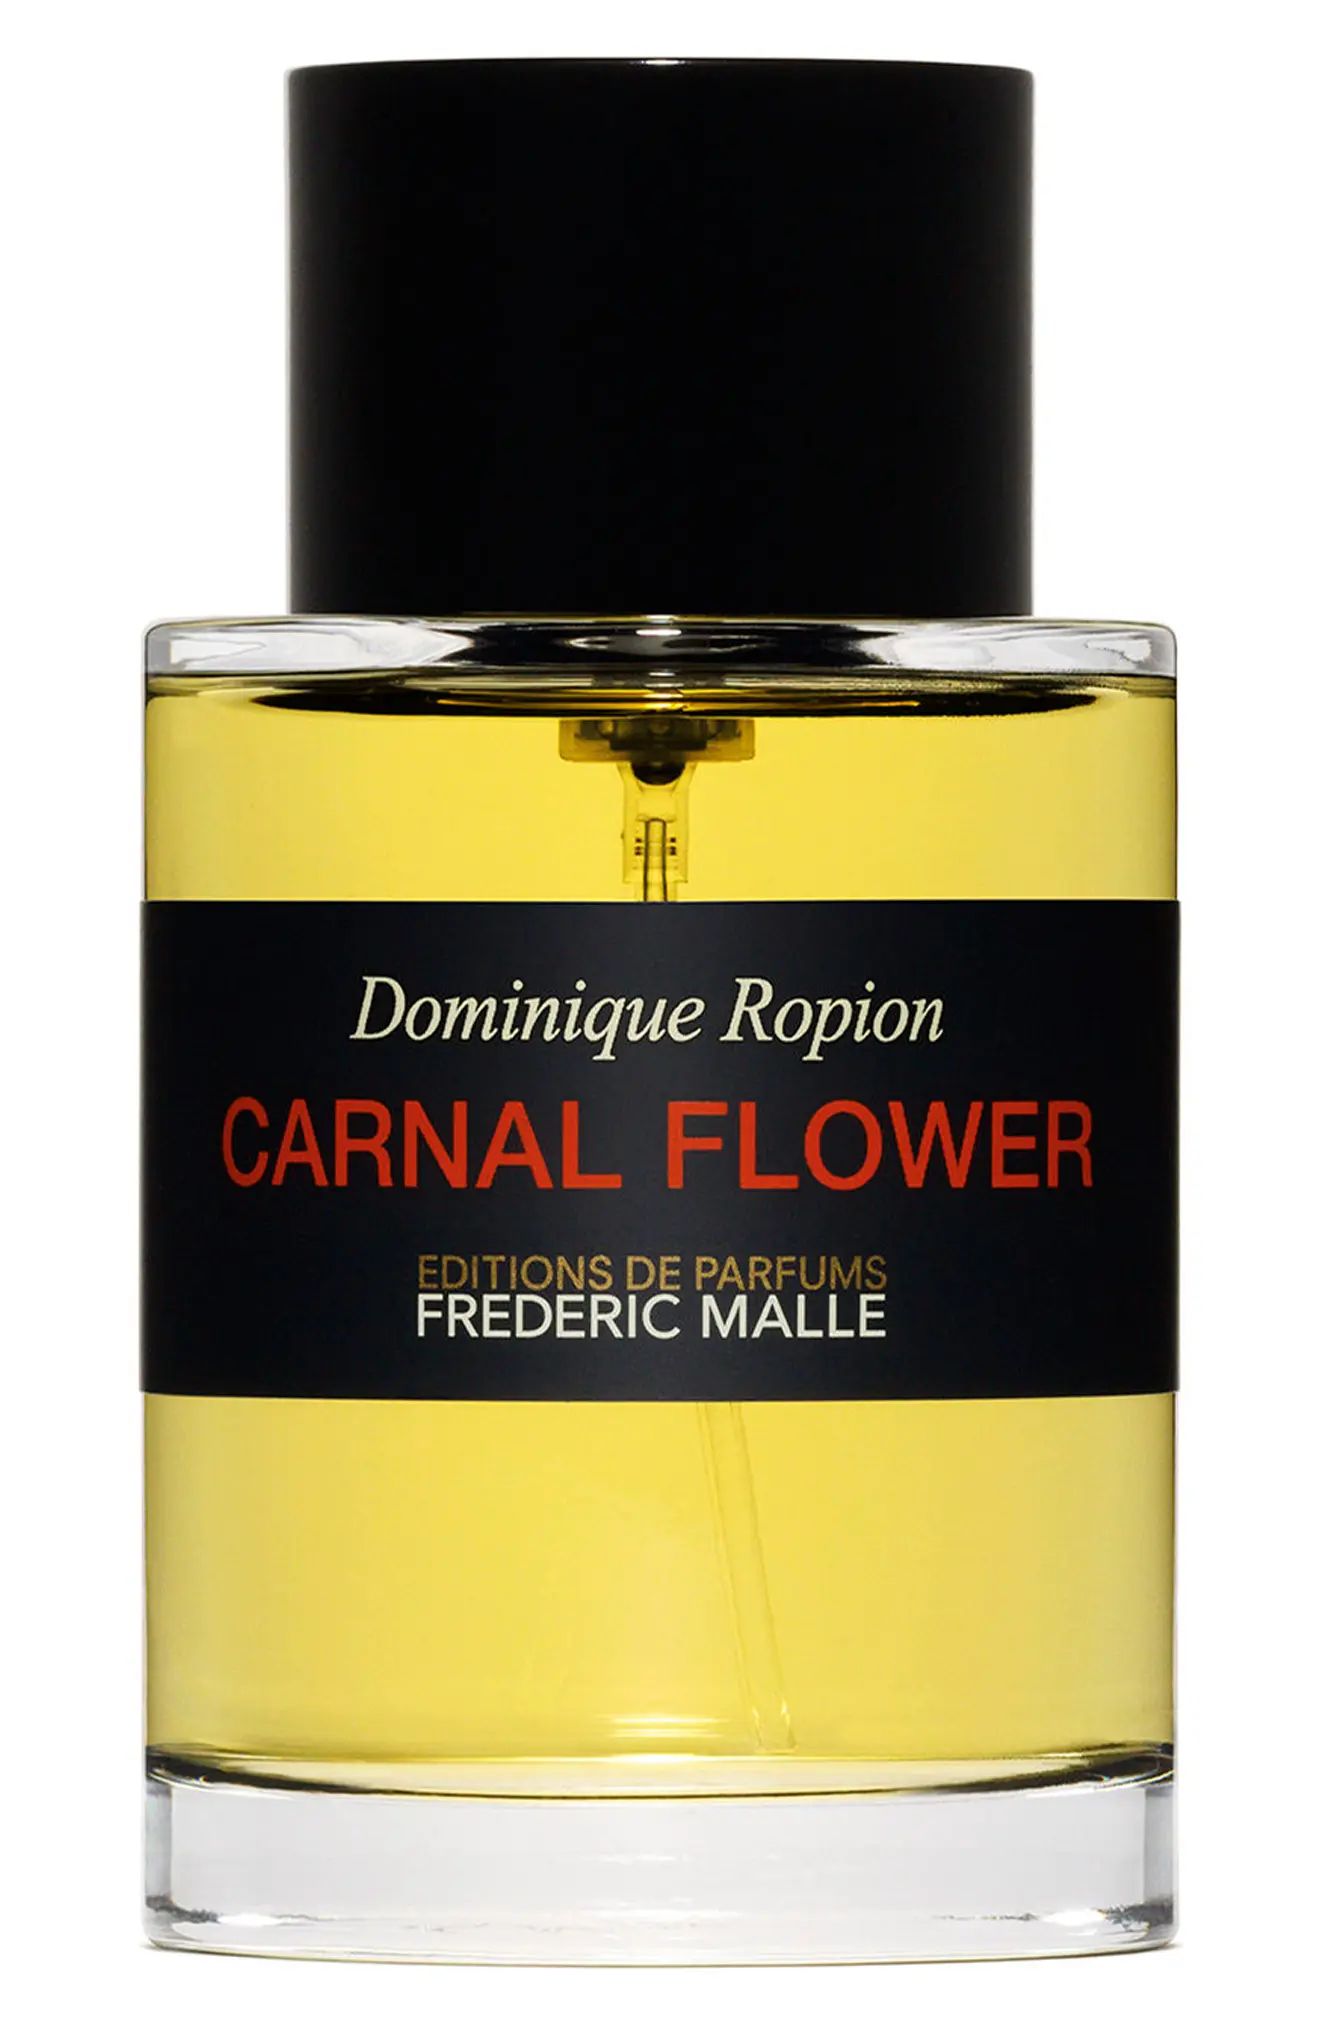 Frederic Malle Carnal Flower Parfum Spray at Nordstrom, Size 3.4 Oz | Nordstrom